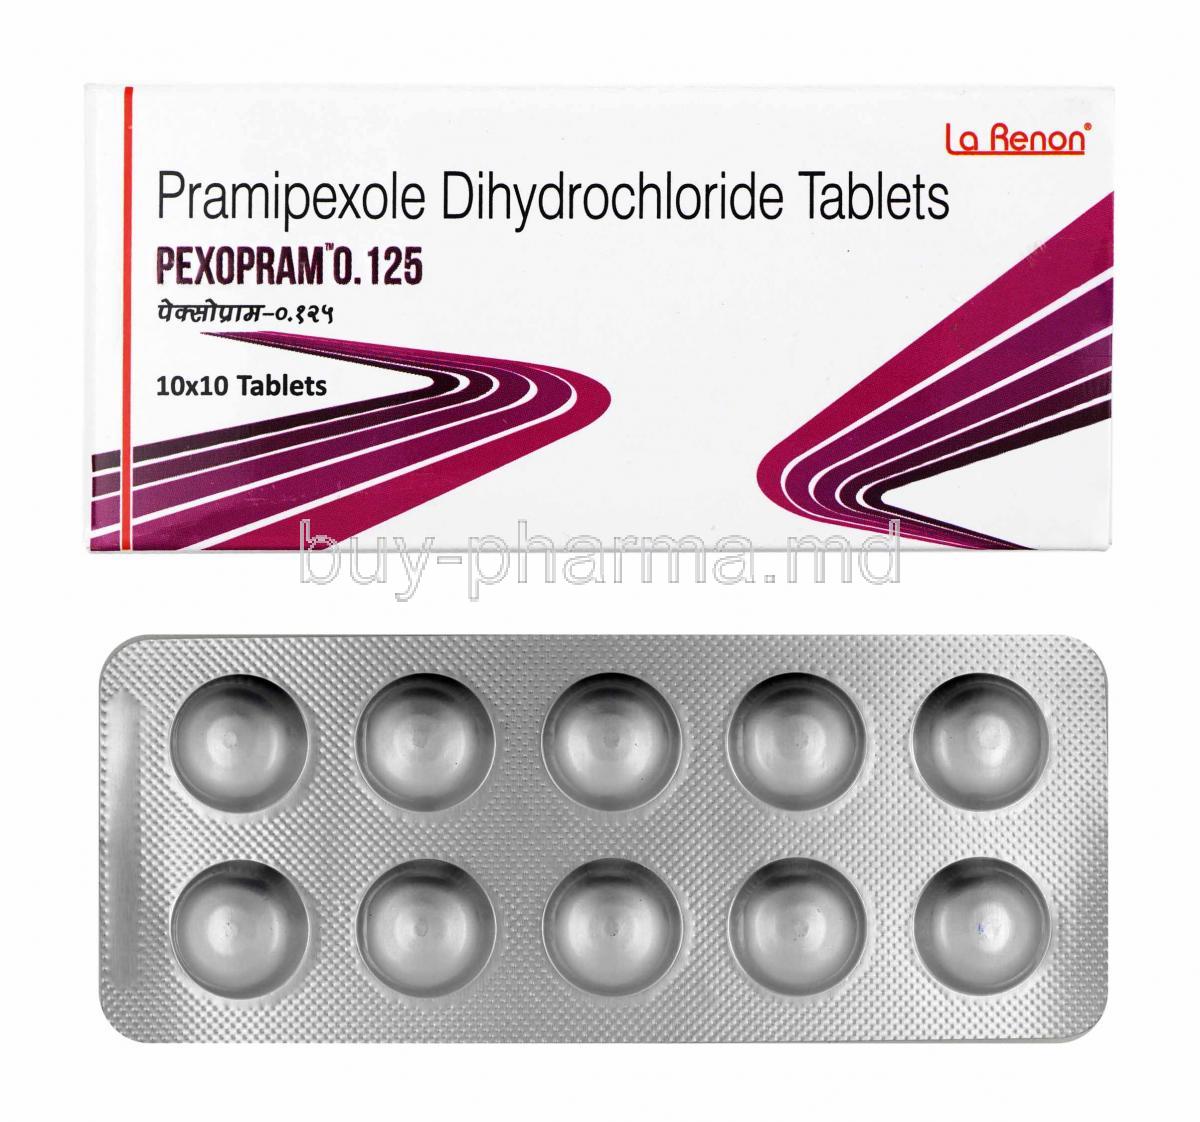 Pexopram, Pramipexole 0.125mg box and tablets